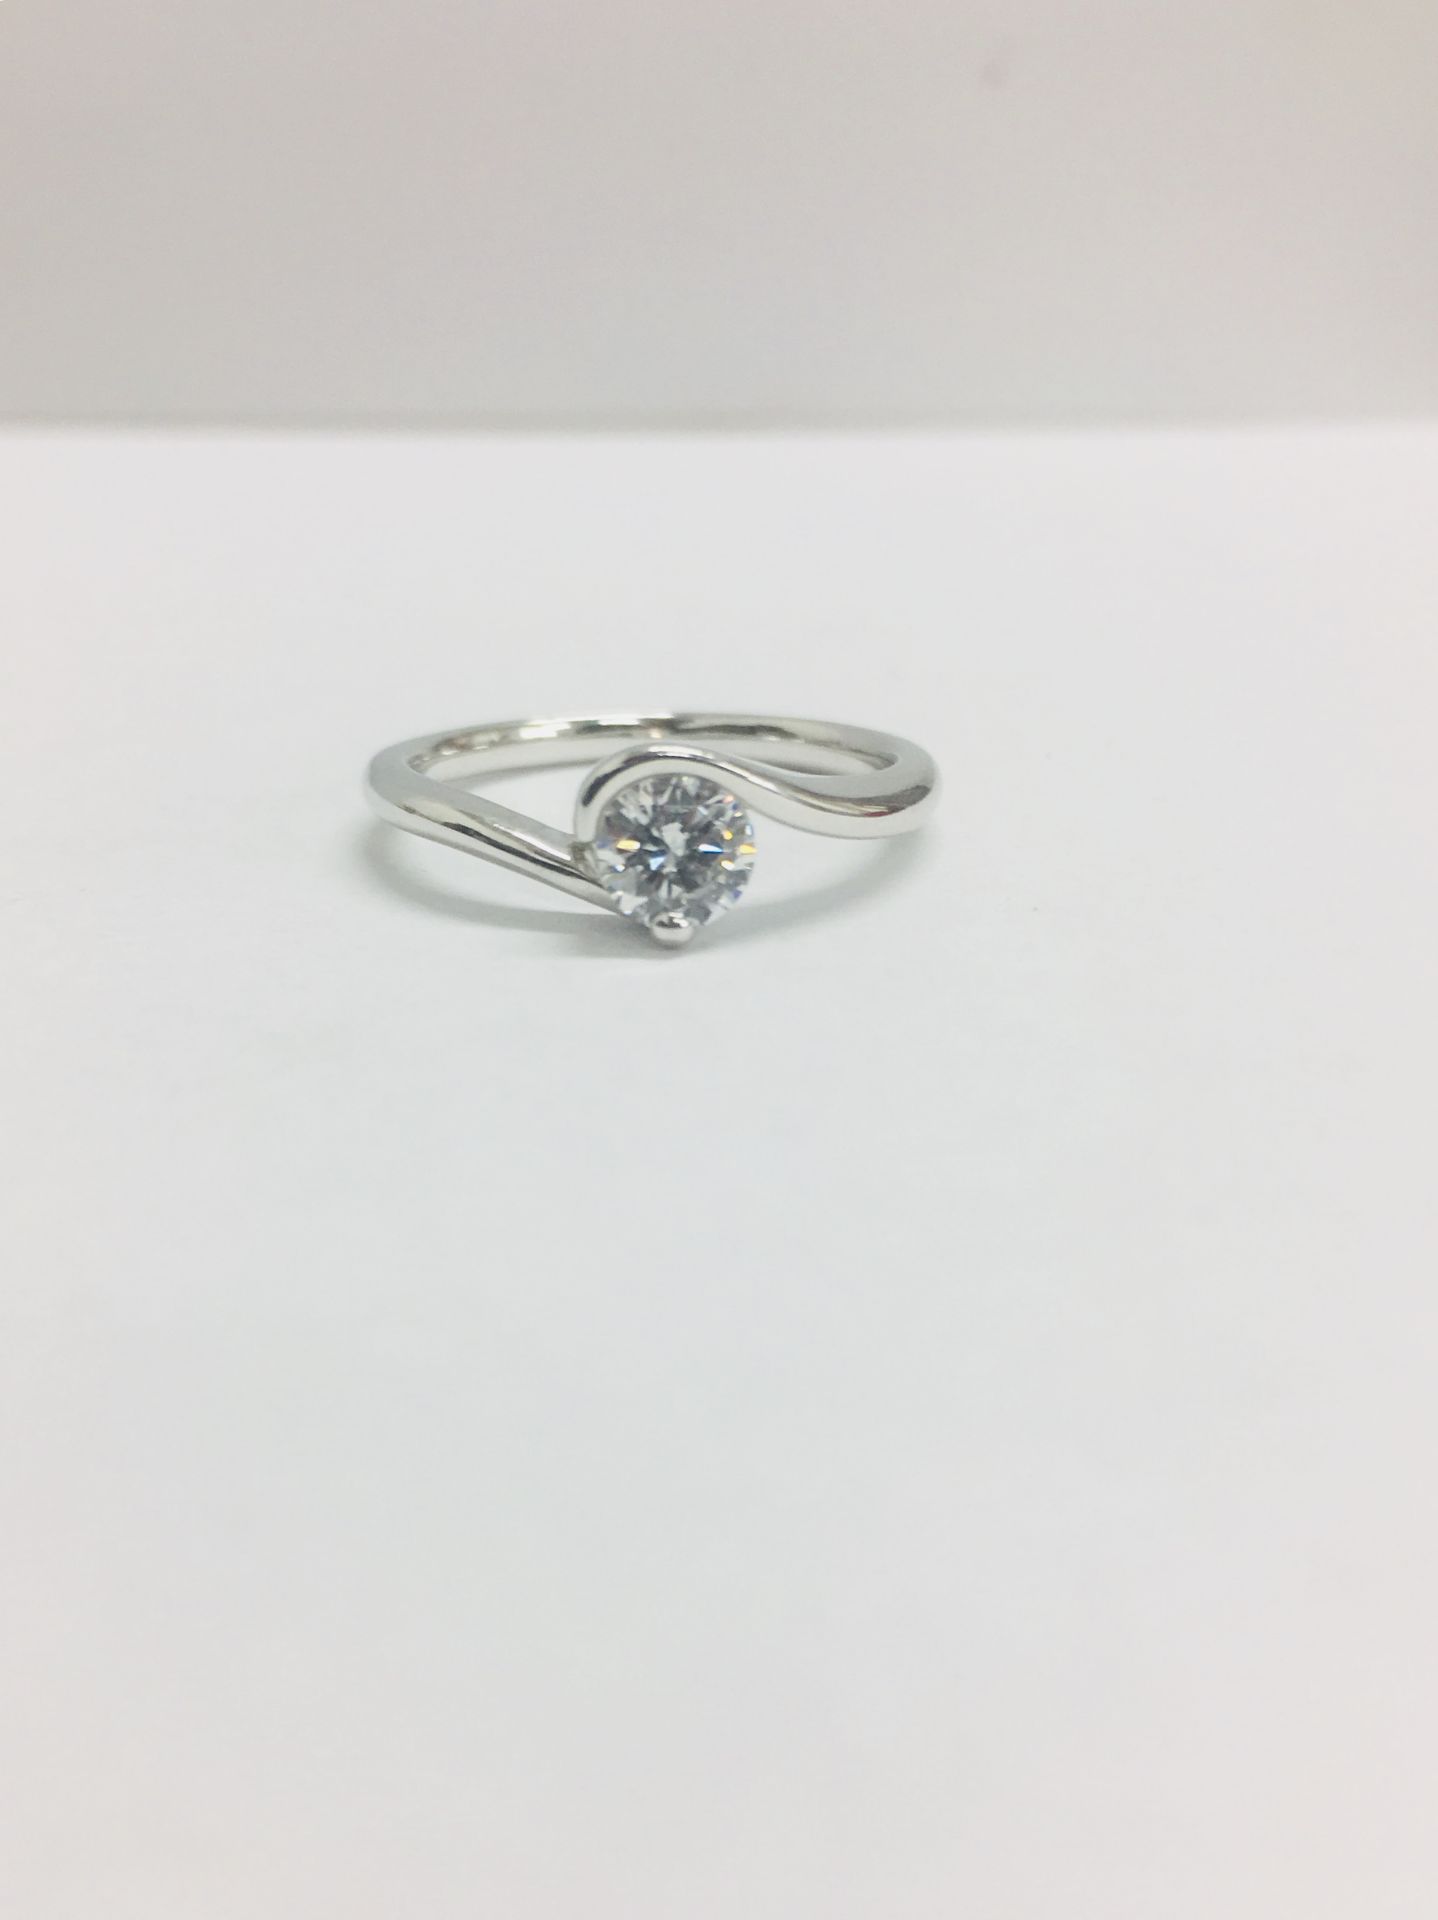 Platinum twist style diamond solitaire ring,0.50ct D colour vs clarity diamond,4.68gms platinum,uk